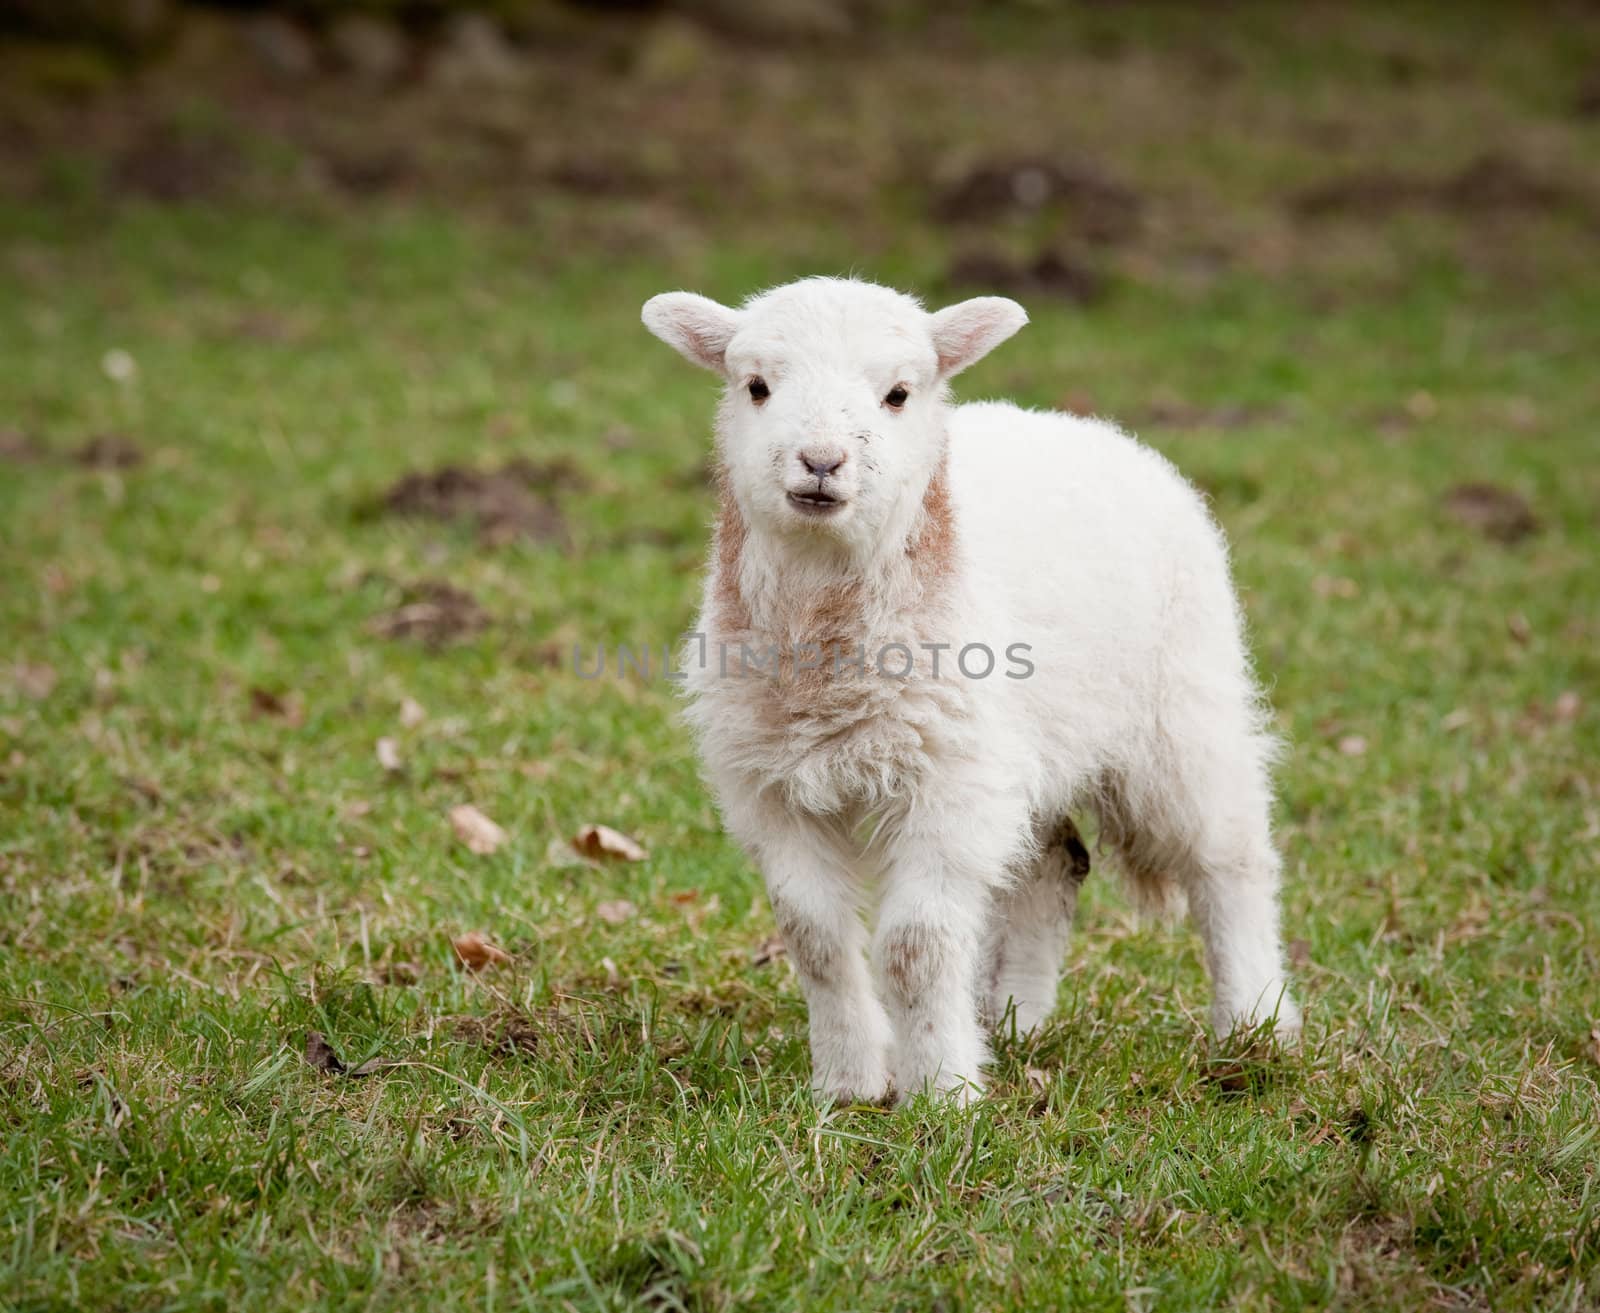 Single new born lamb by steheap